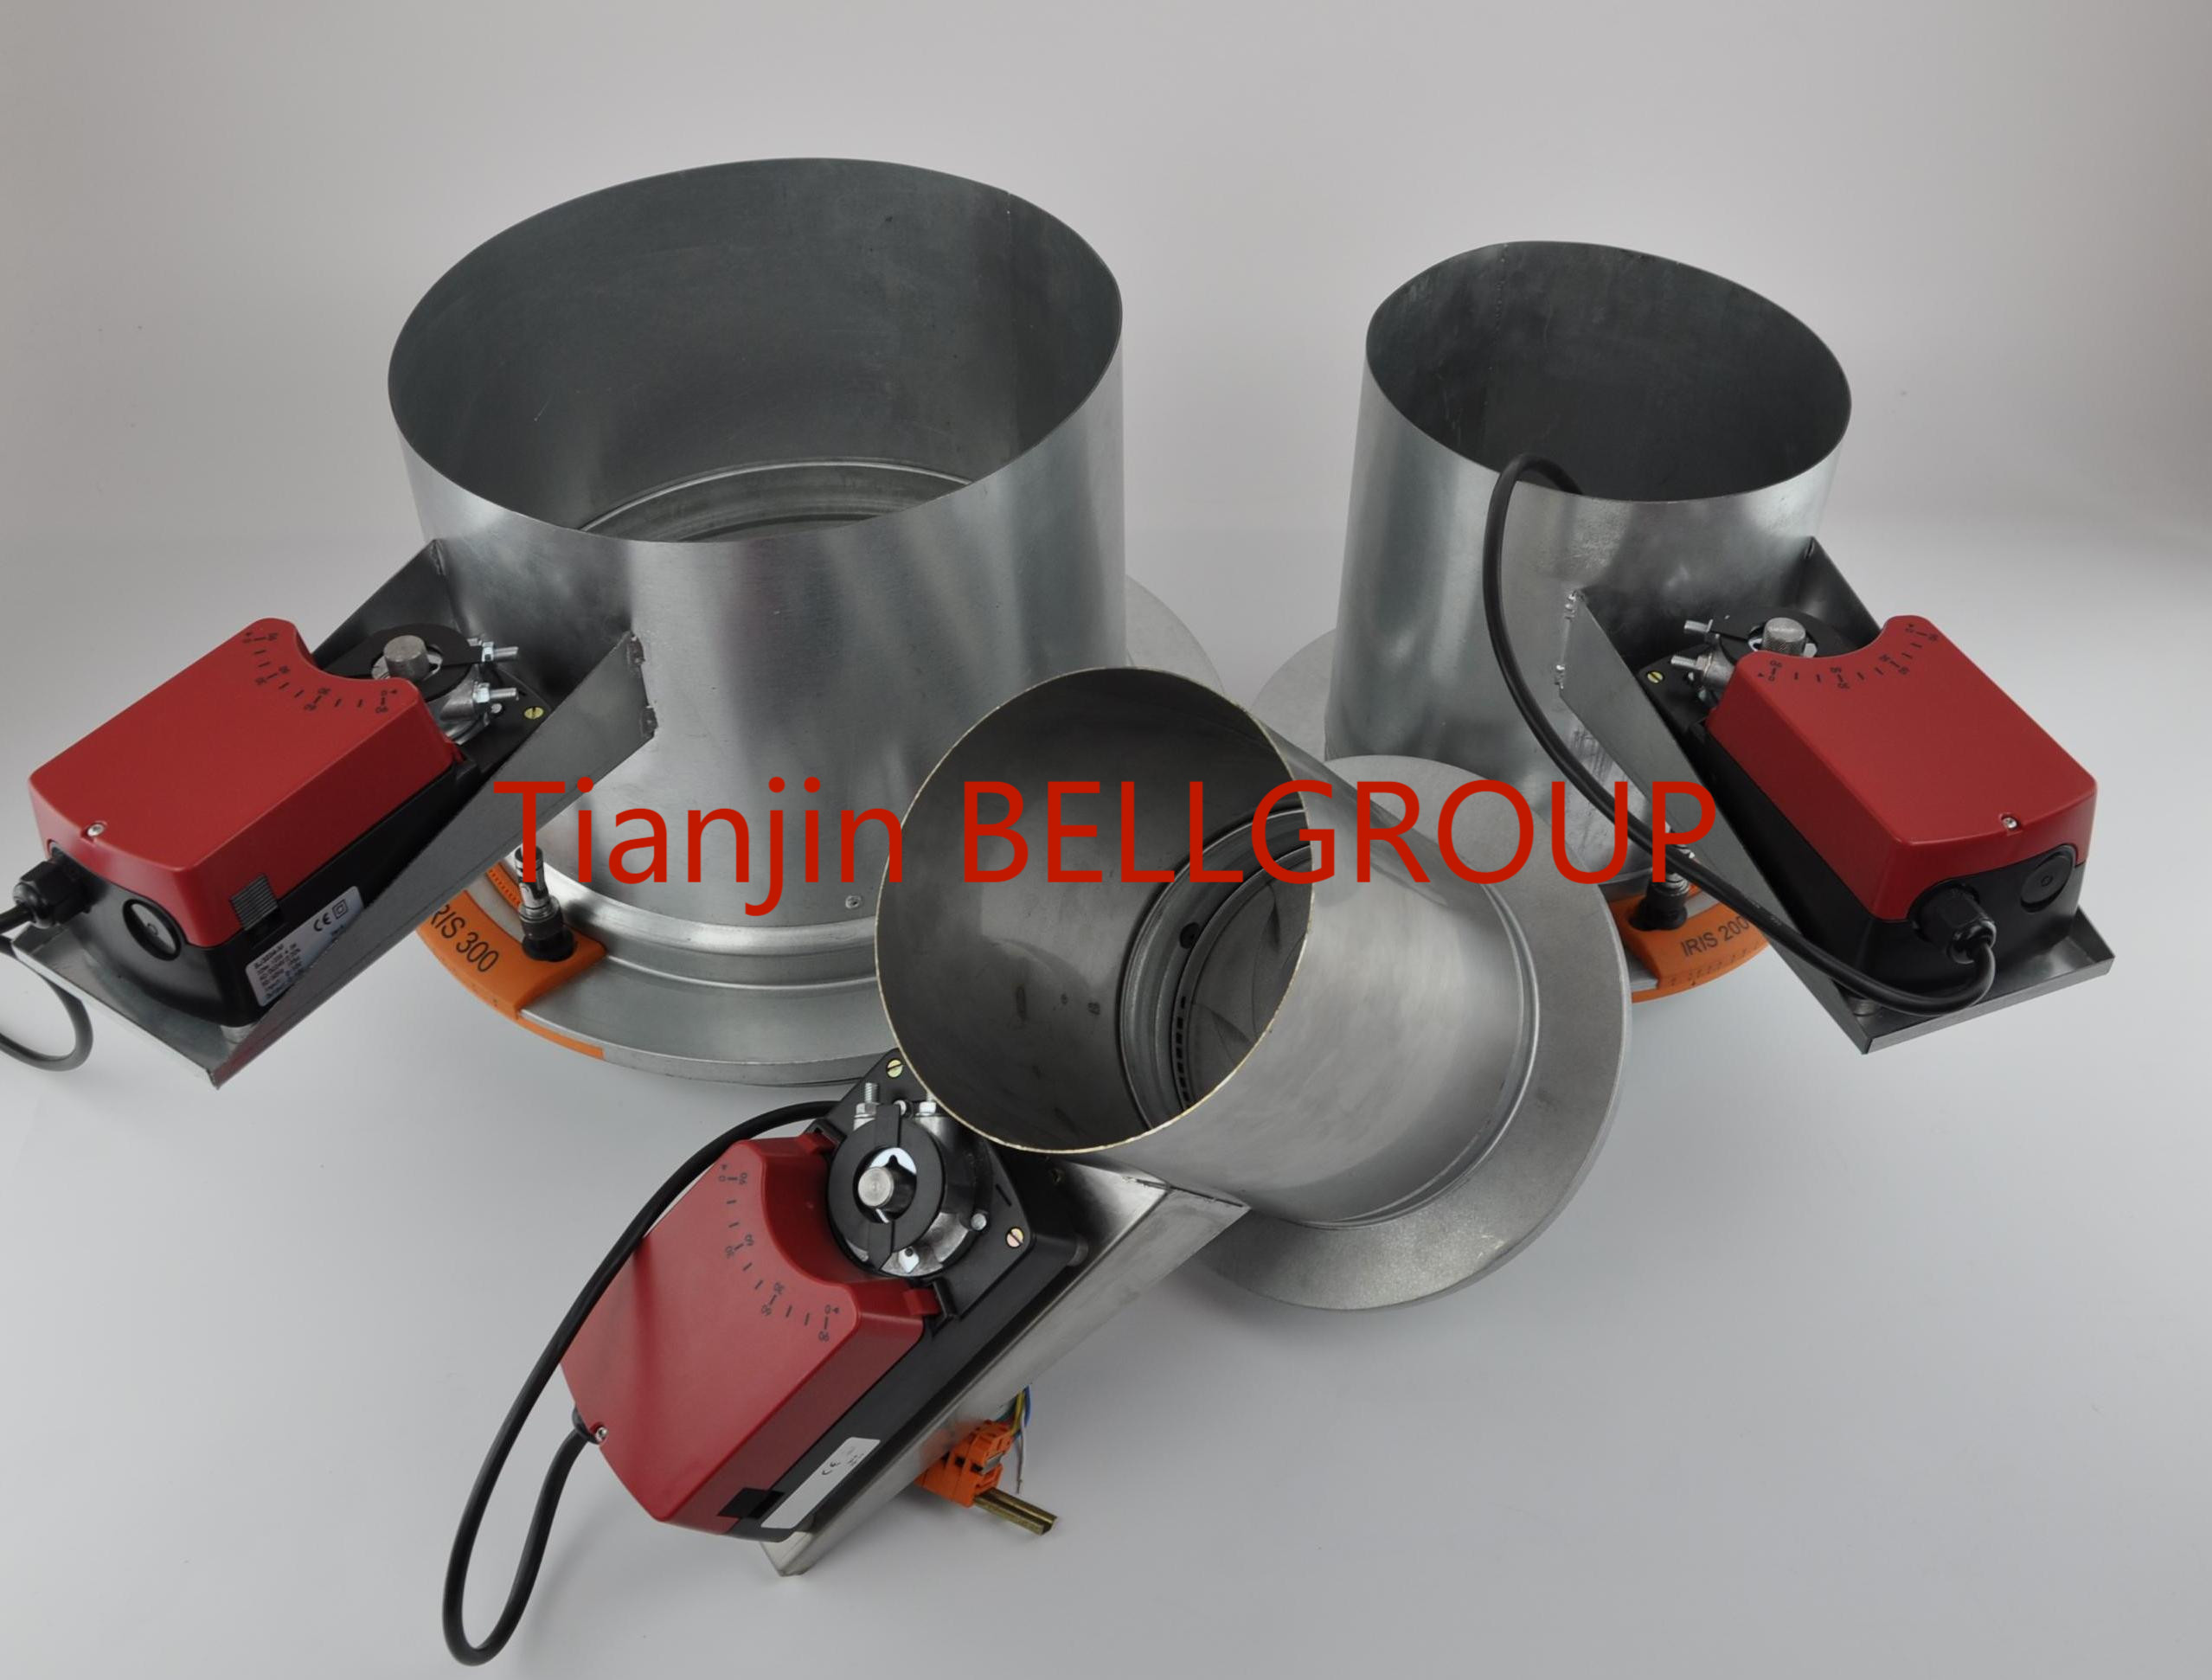 HVAC Motorized IRIS Damper valve, air flow regulator and measuring device